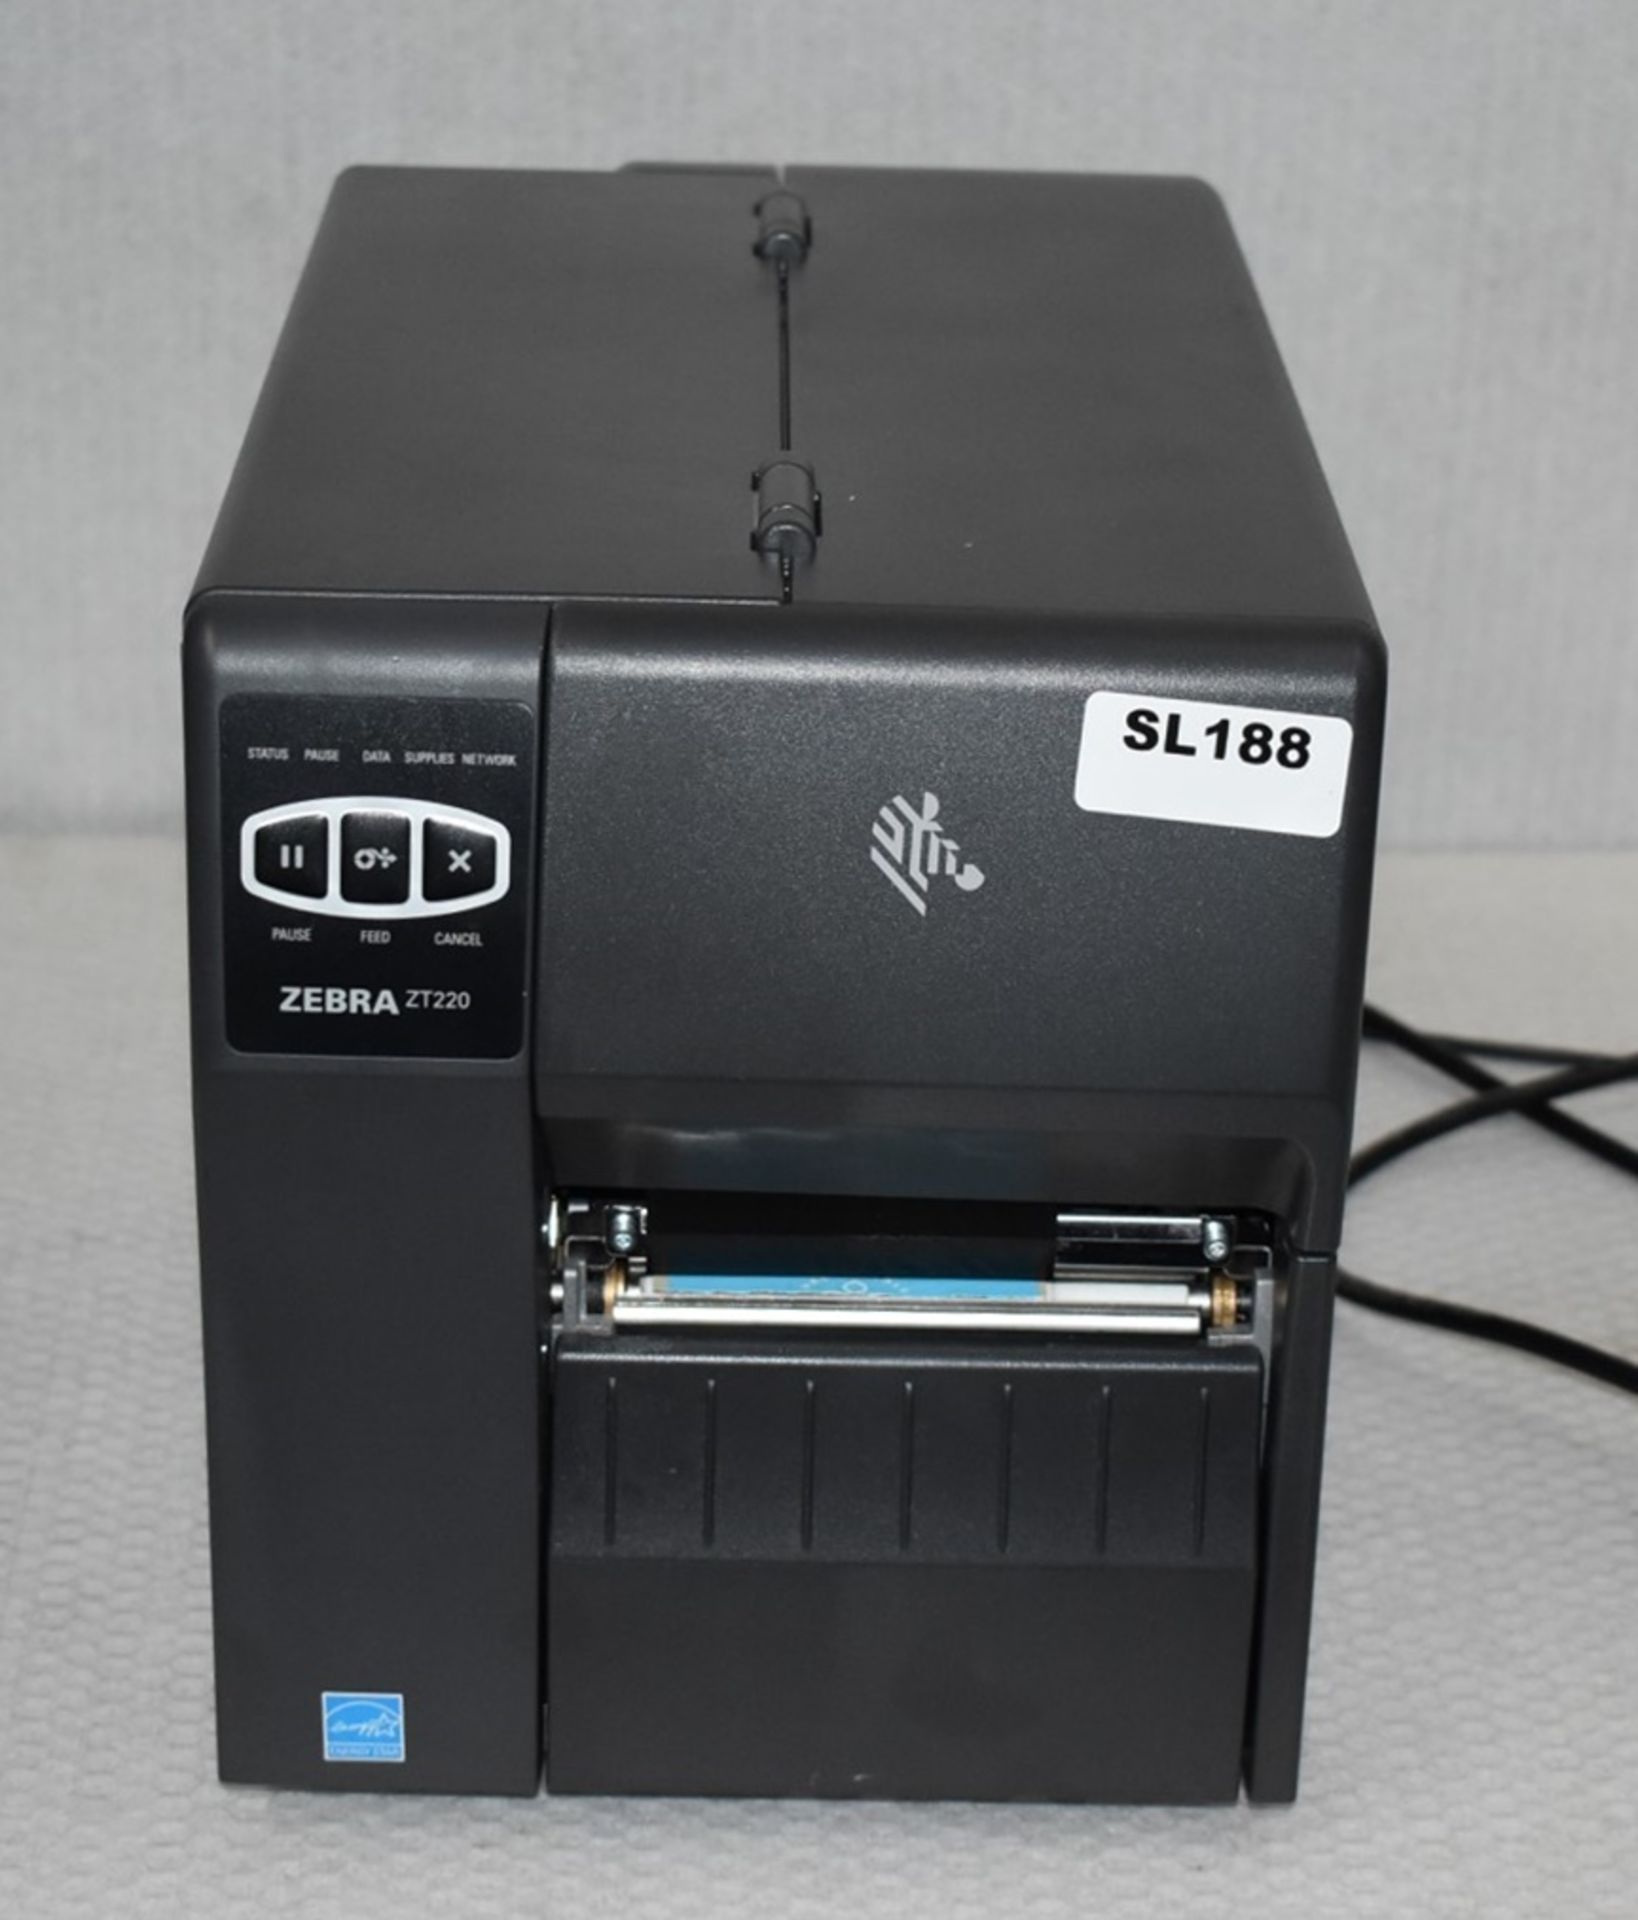 1 x Zebra ZT220 Desktop Thermal Transfer Label Printer - RRP £659 - Recently Removed From a Vegan